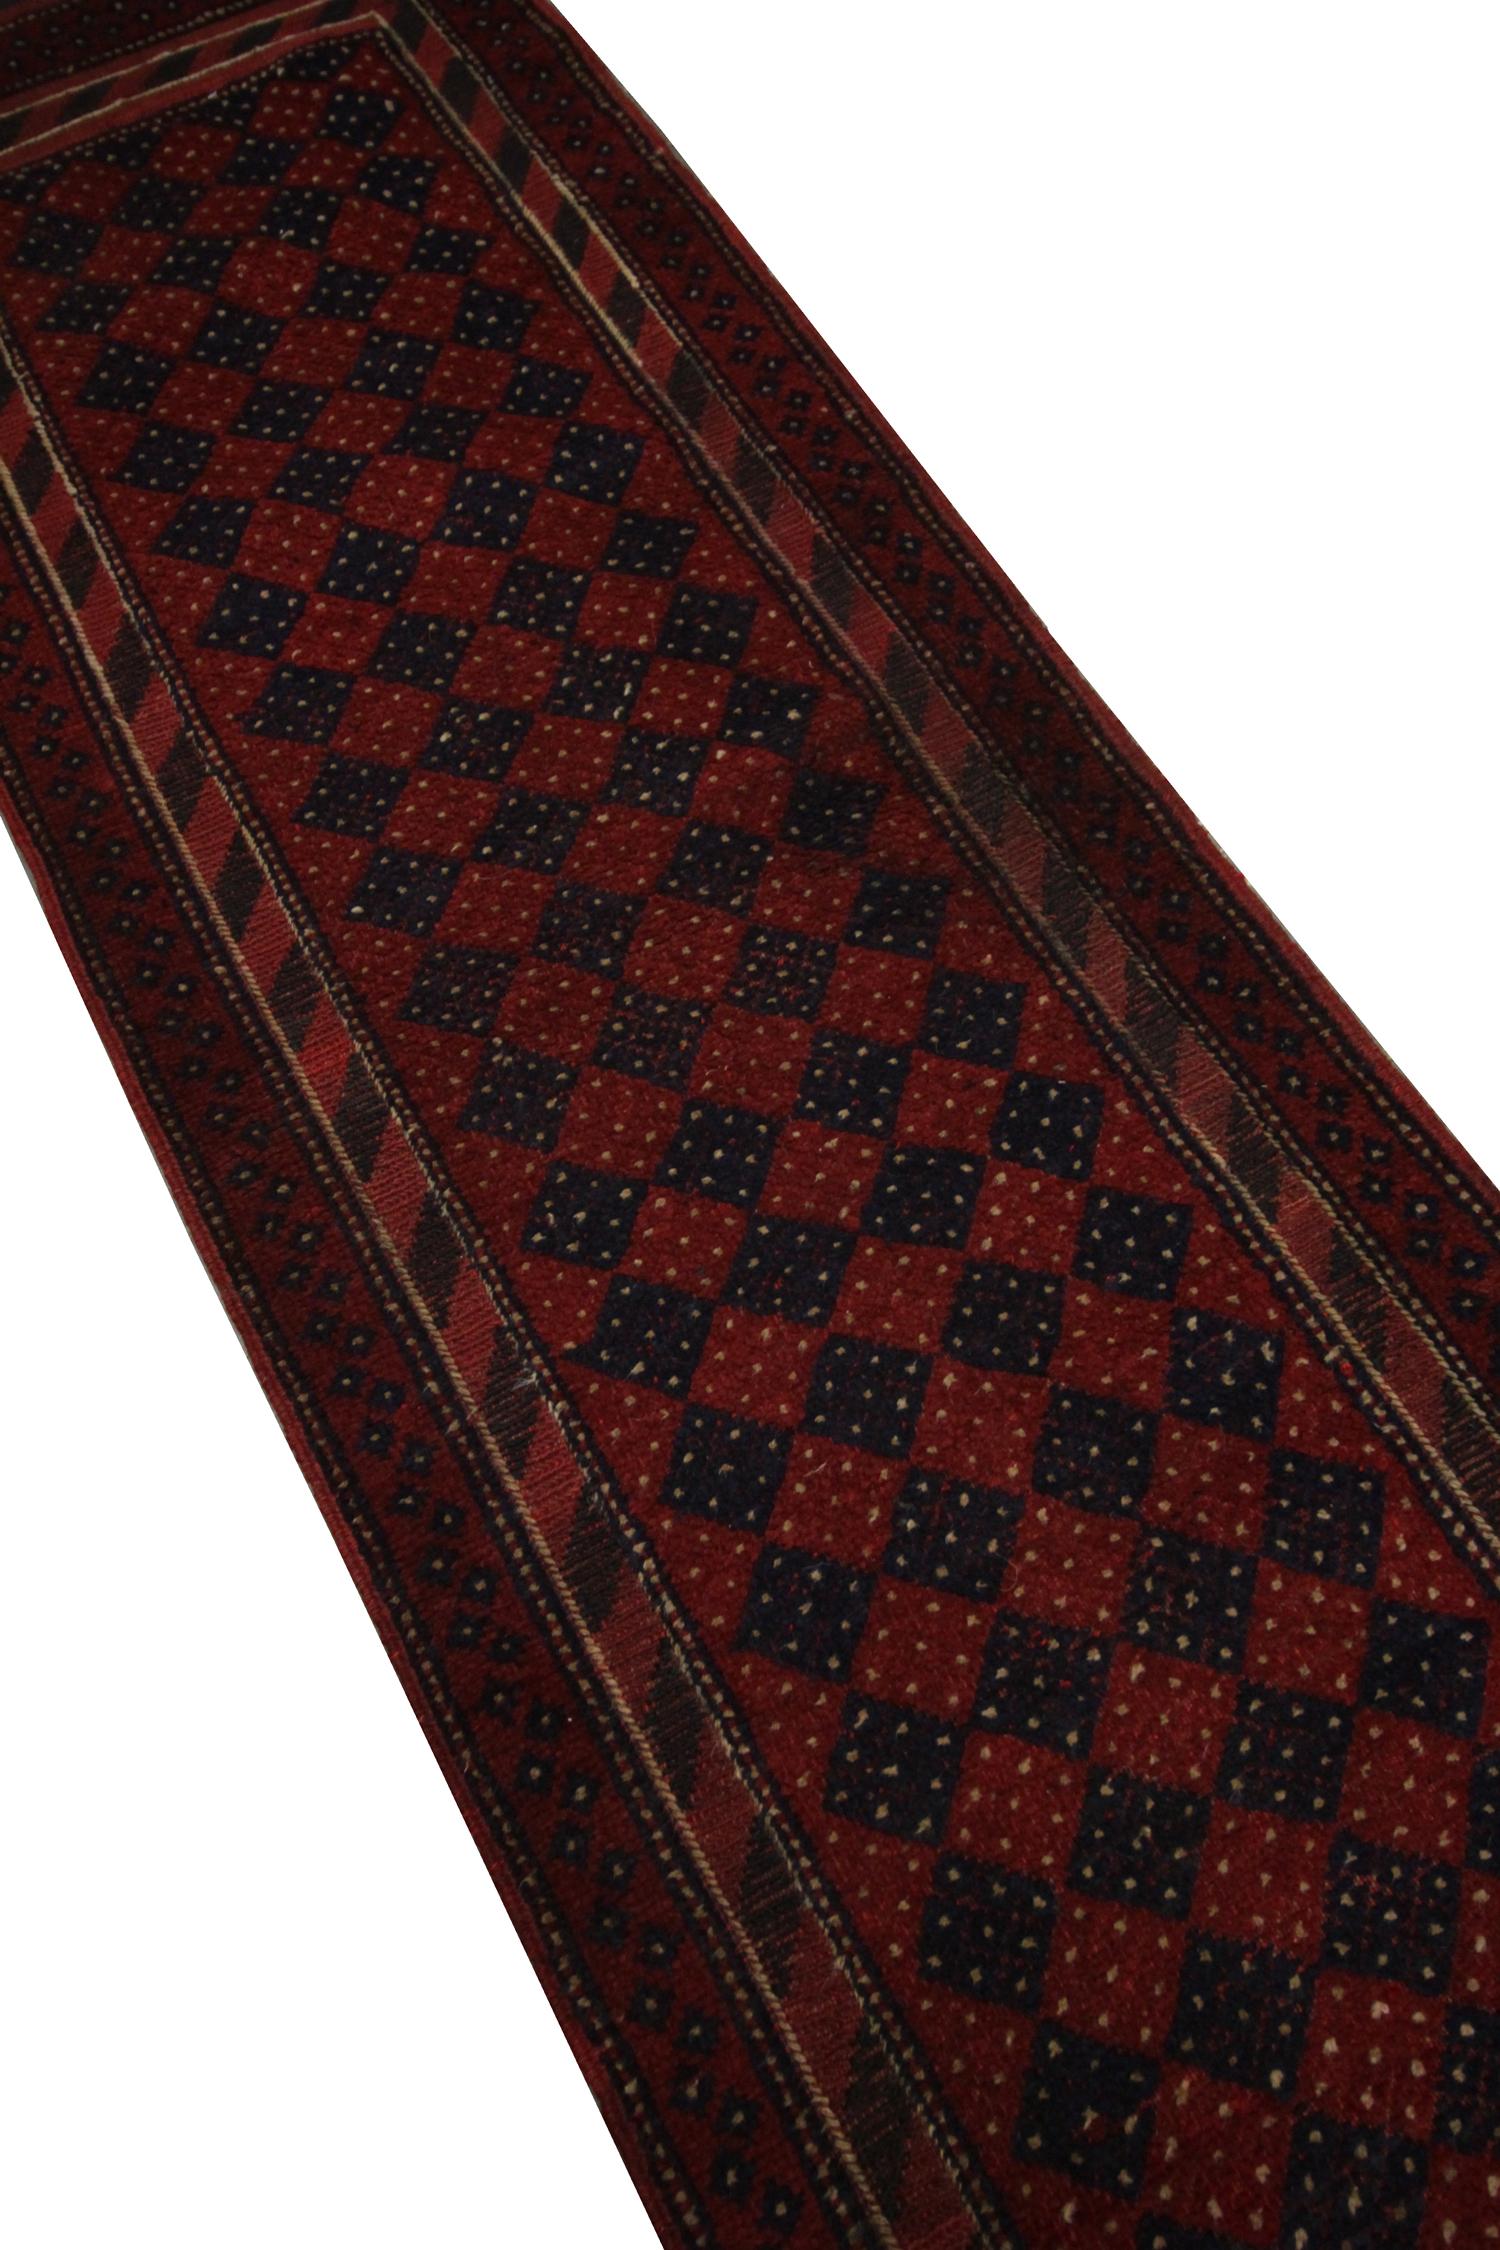 Tribal Handwoven Runner Oriental Rug, Rustic Traditional Red Wool Carpet